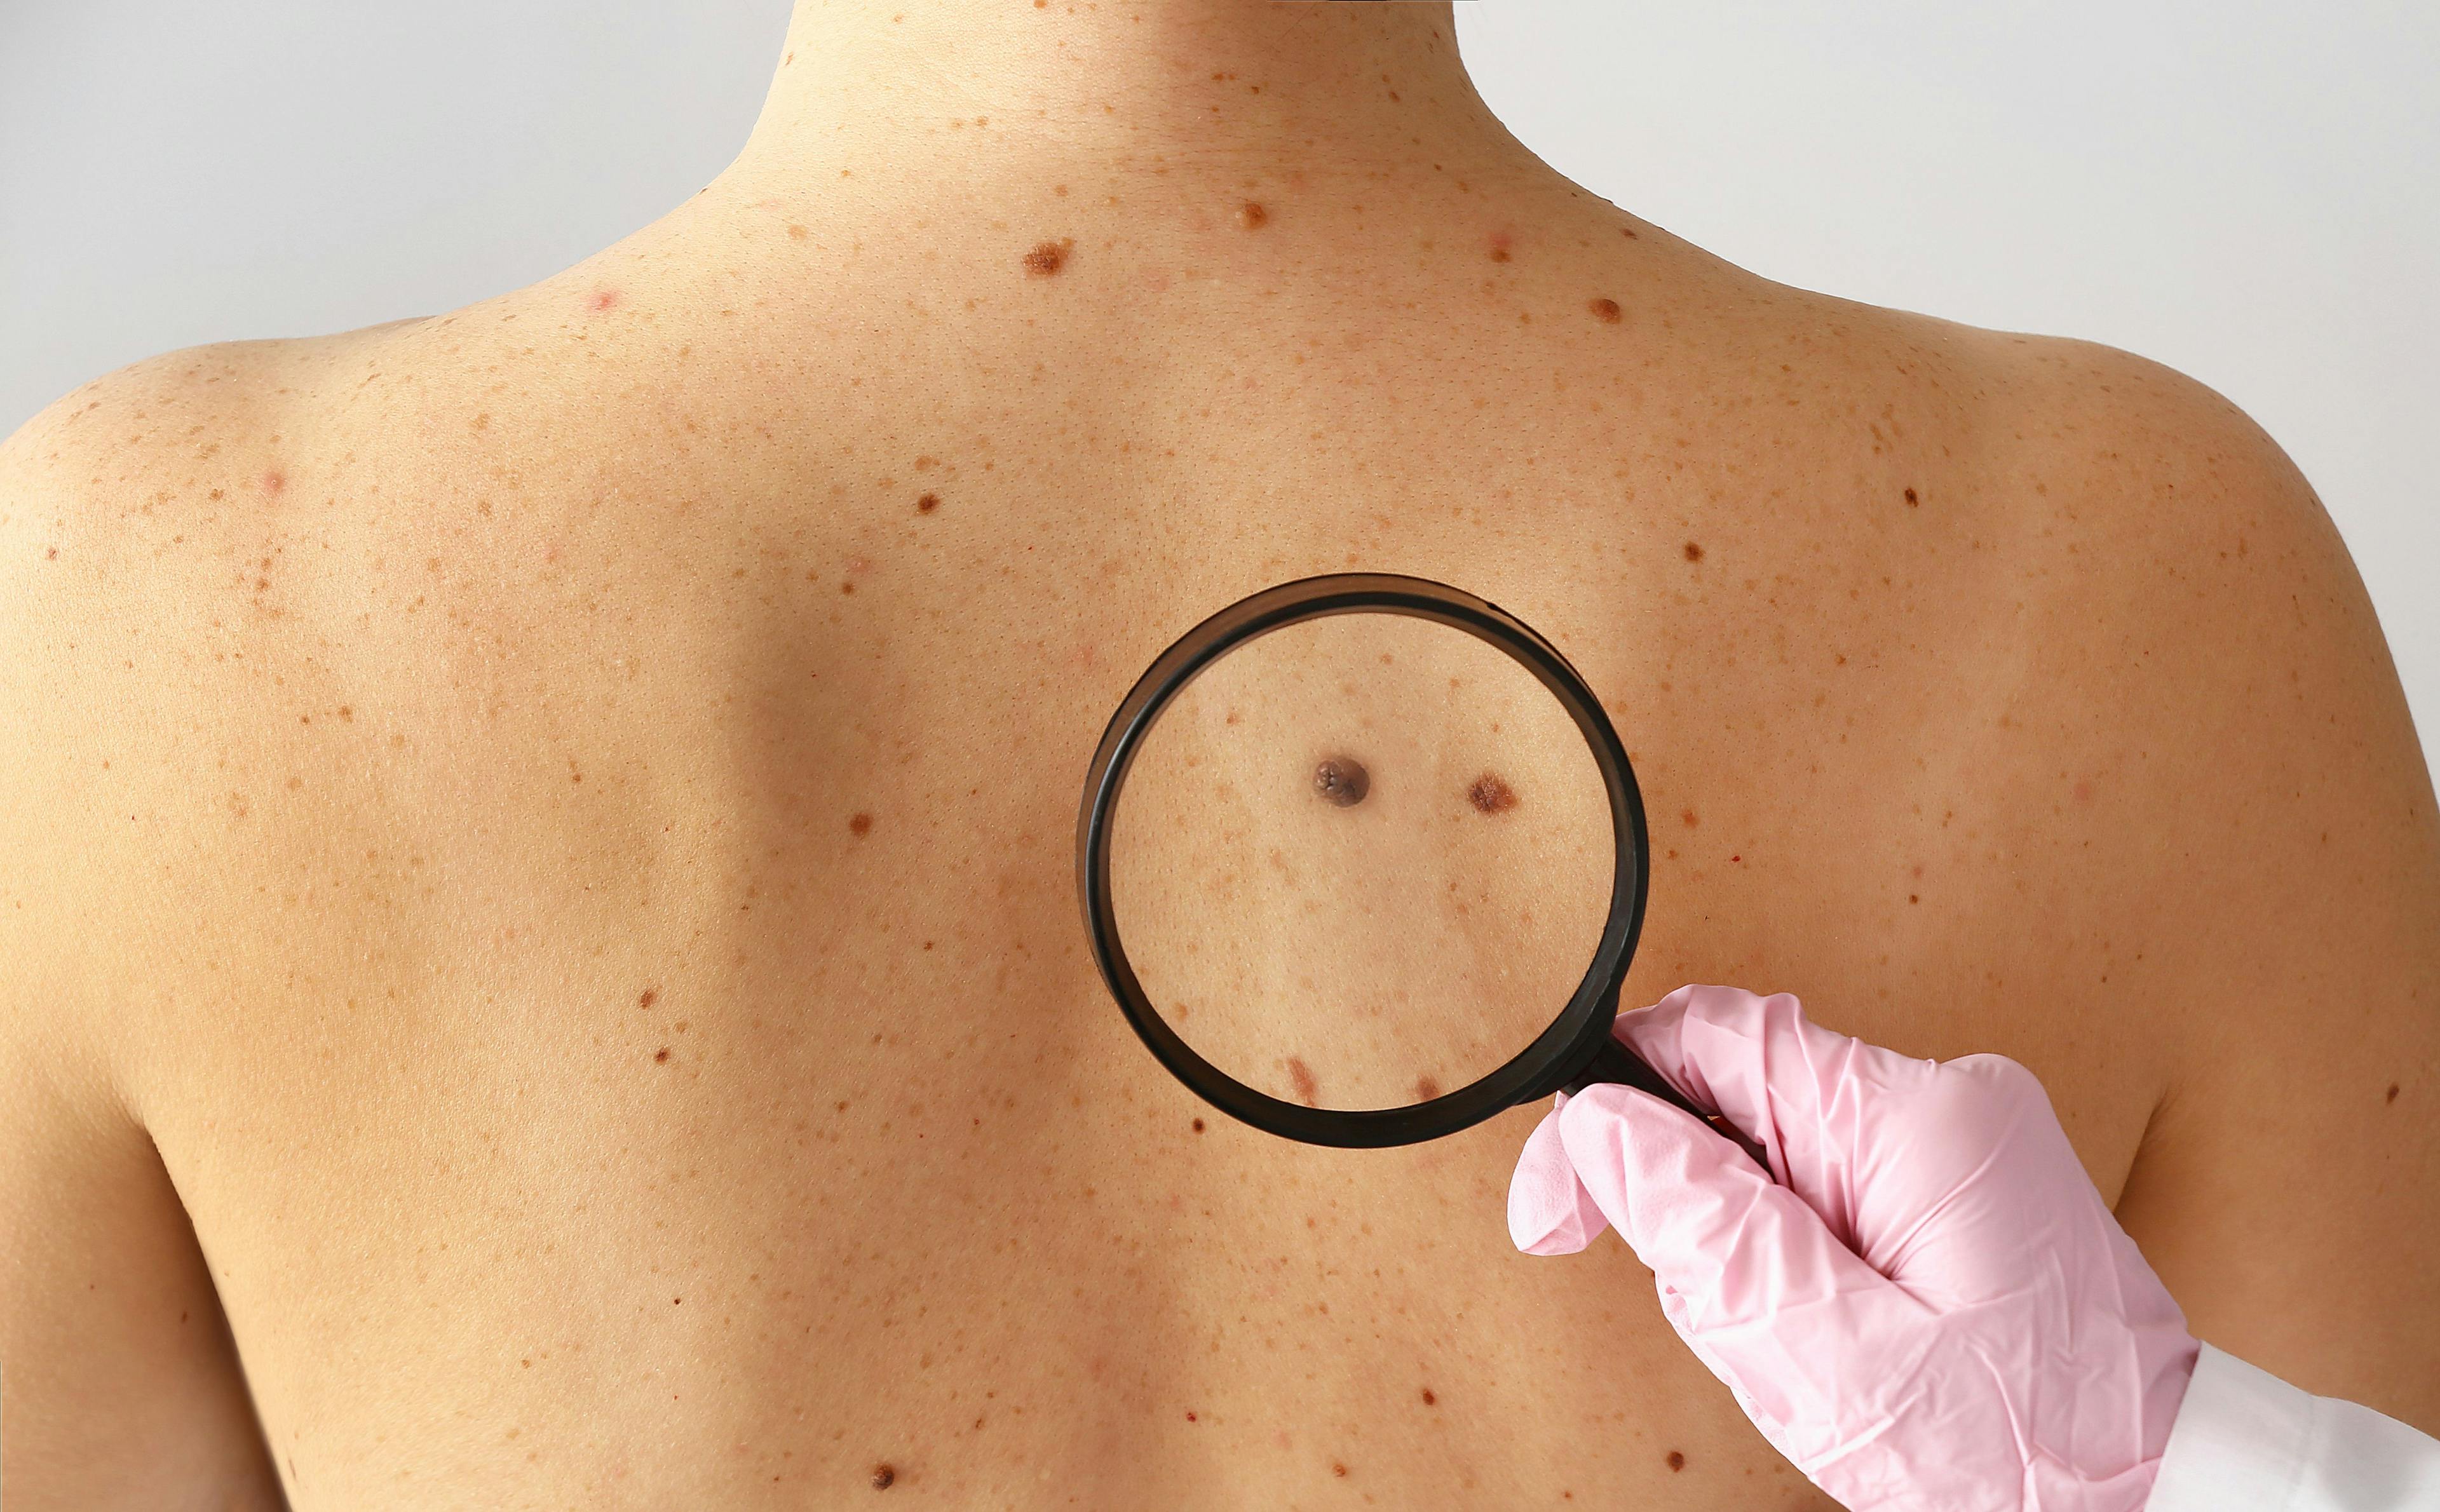 Dermatologist examining moles of patient in clinic. Credit: Pixel-Shot - stock.adobe.com